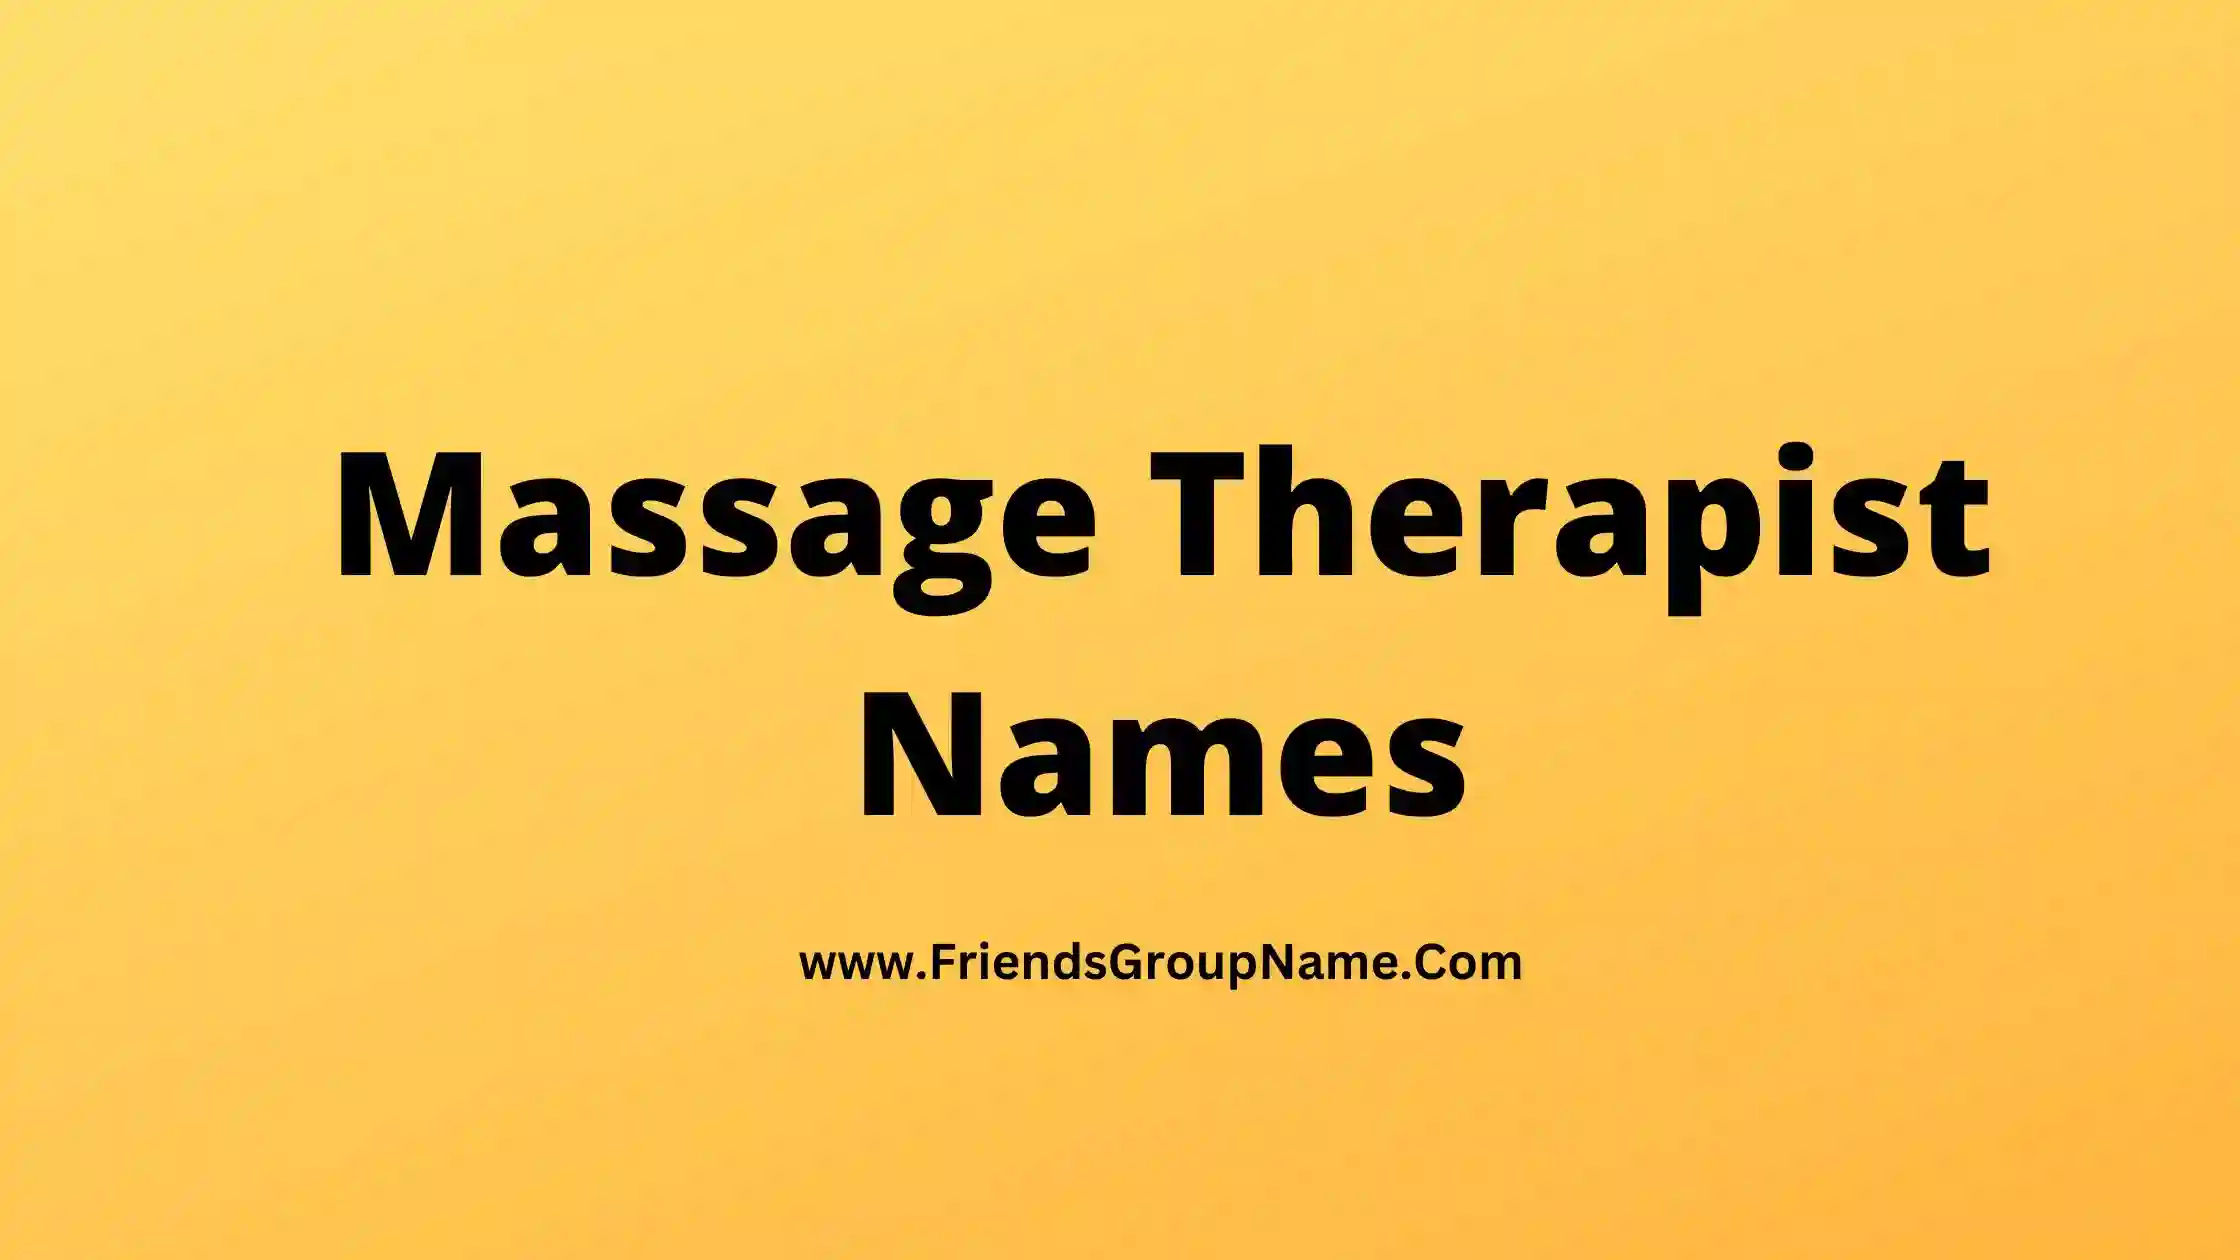 Massage Therapist Names